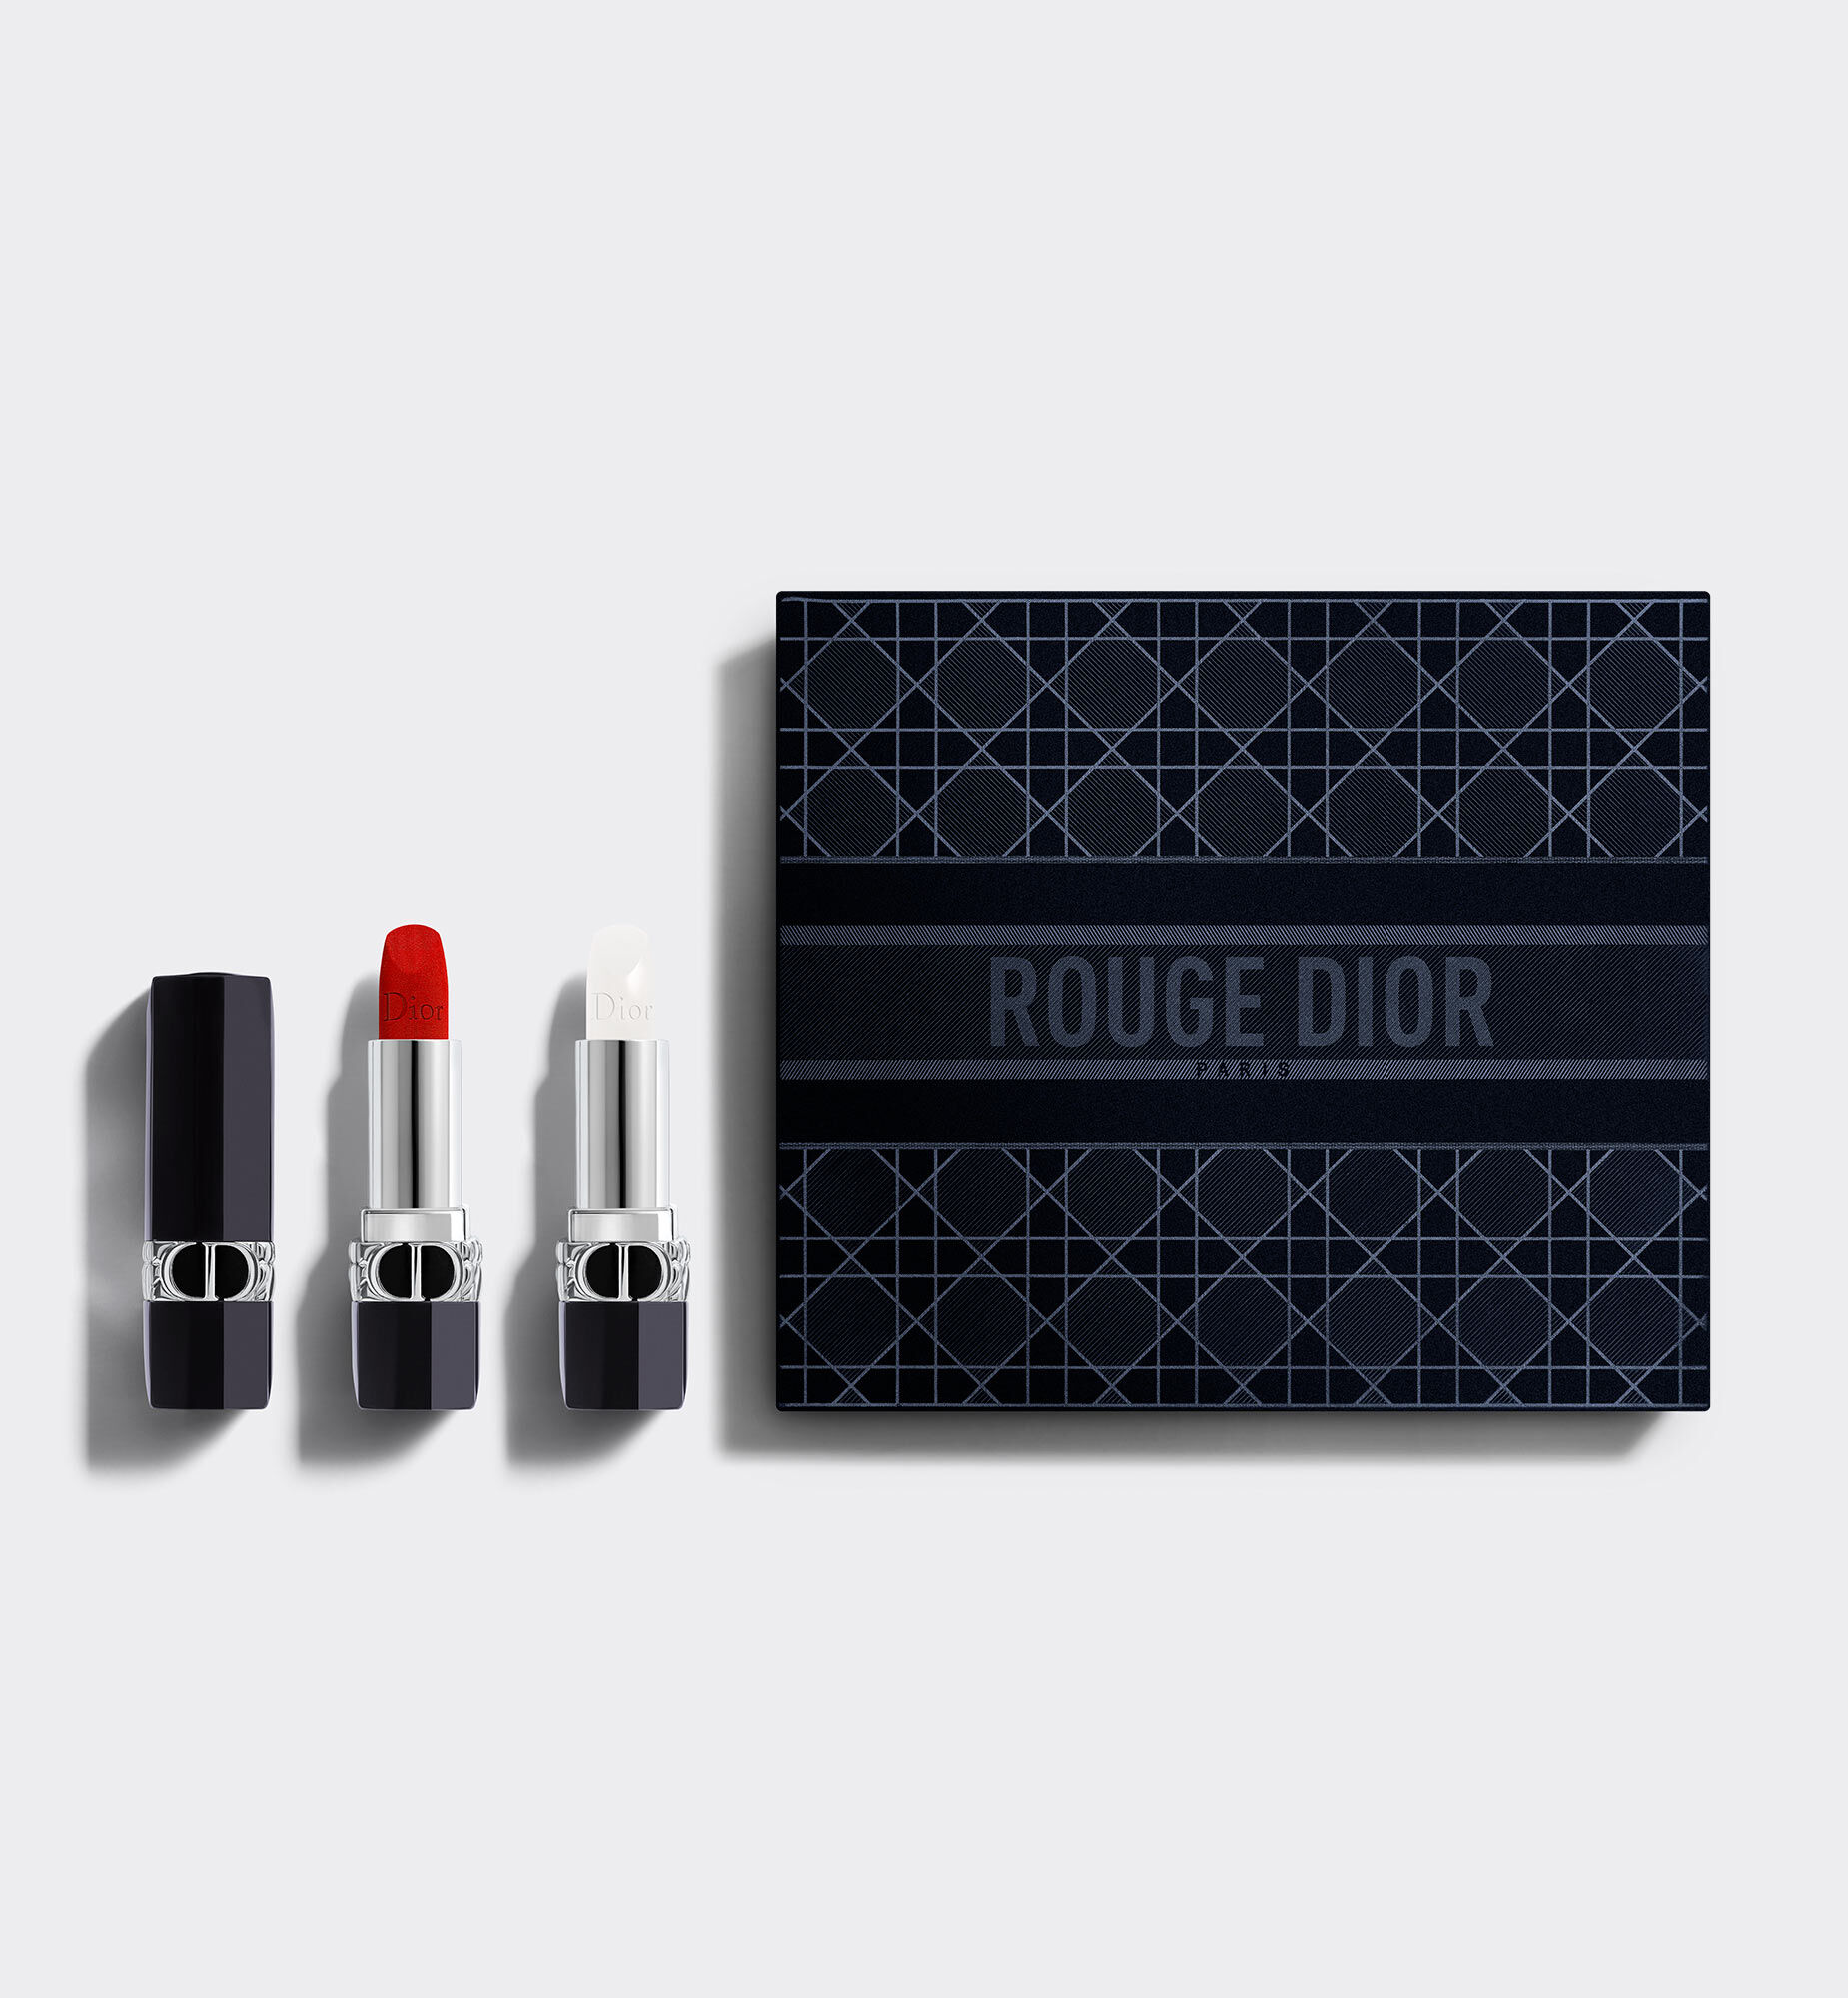 New Dior Beauty Gift Set  eBay